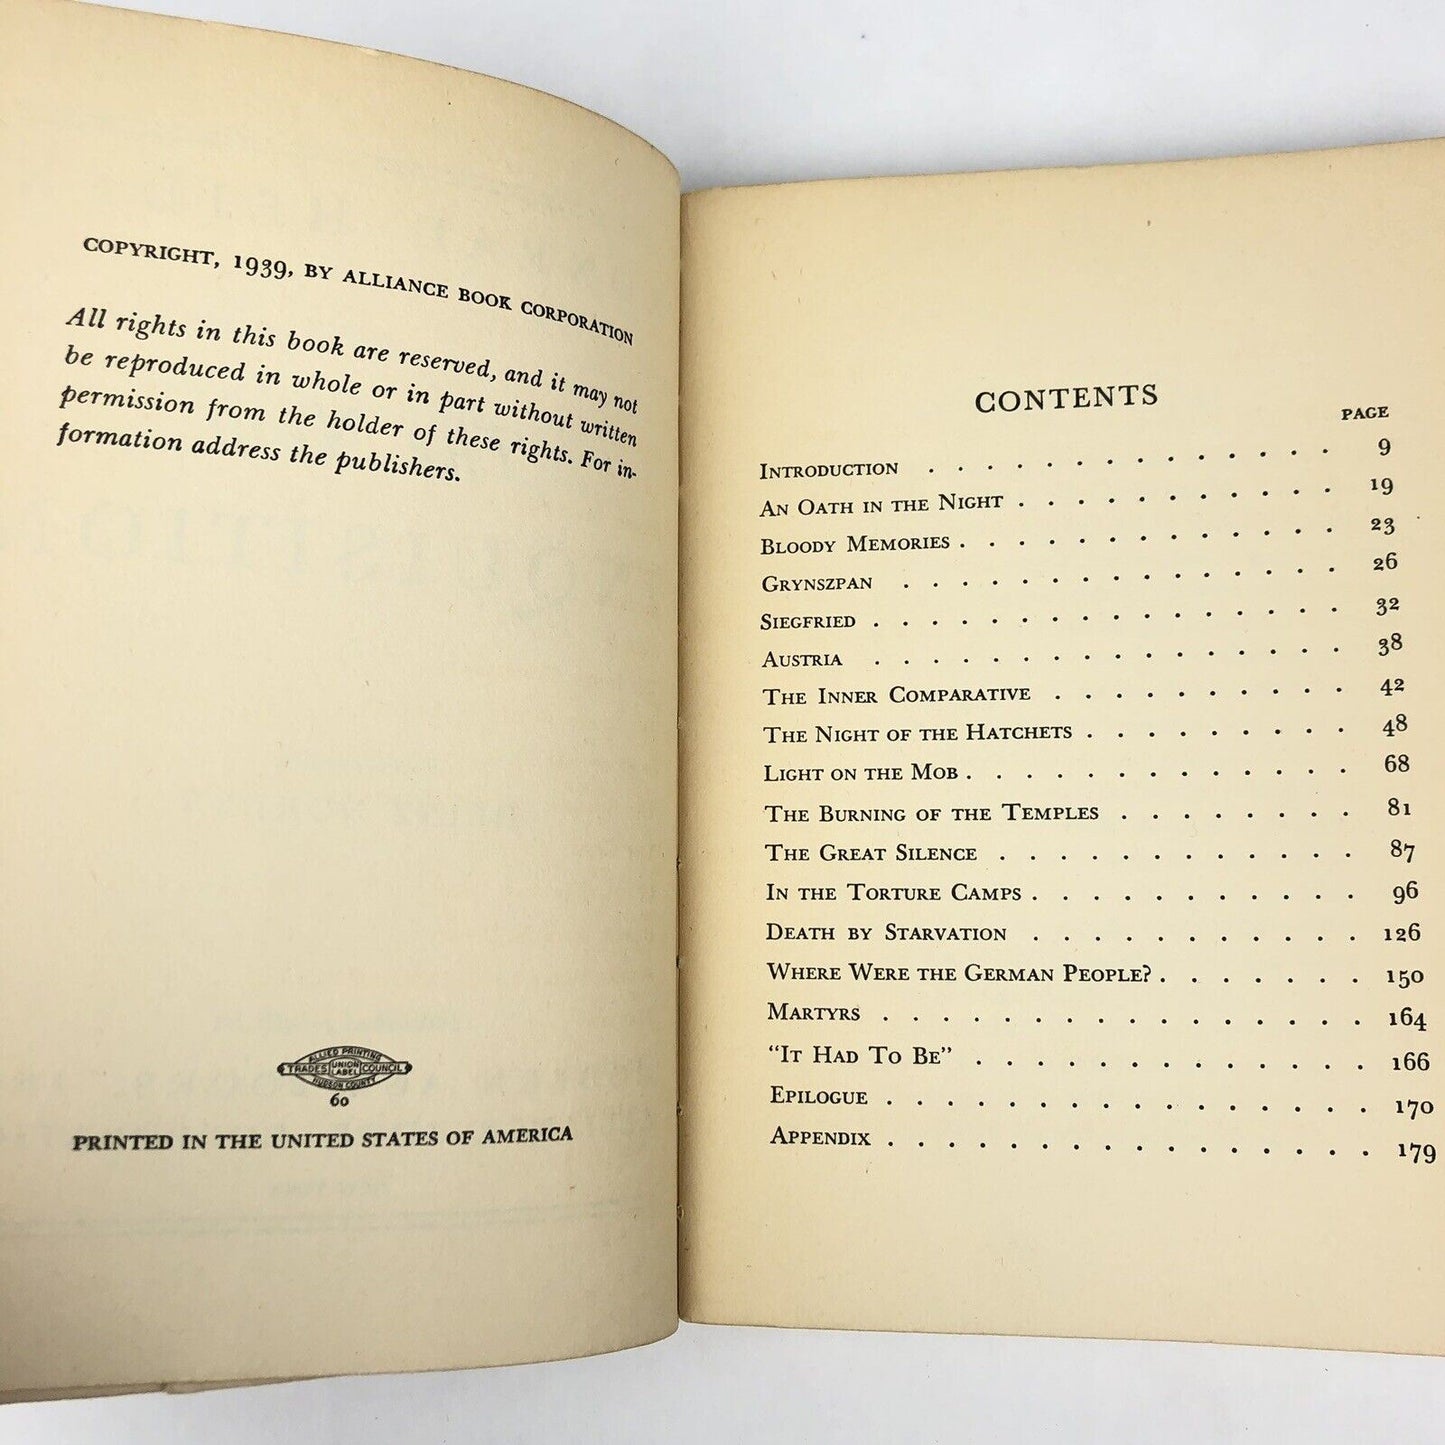 THE NEW INQUISITION By KONRAD HEIDEN 1939 SC 1st Ed Hendrik Willem Van Loom WW2